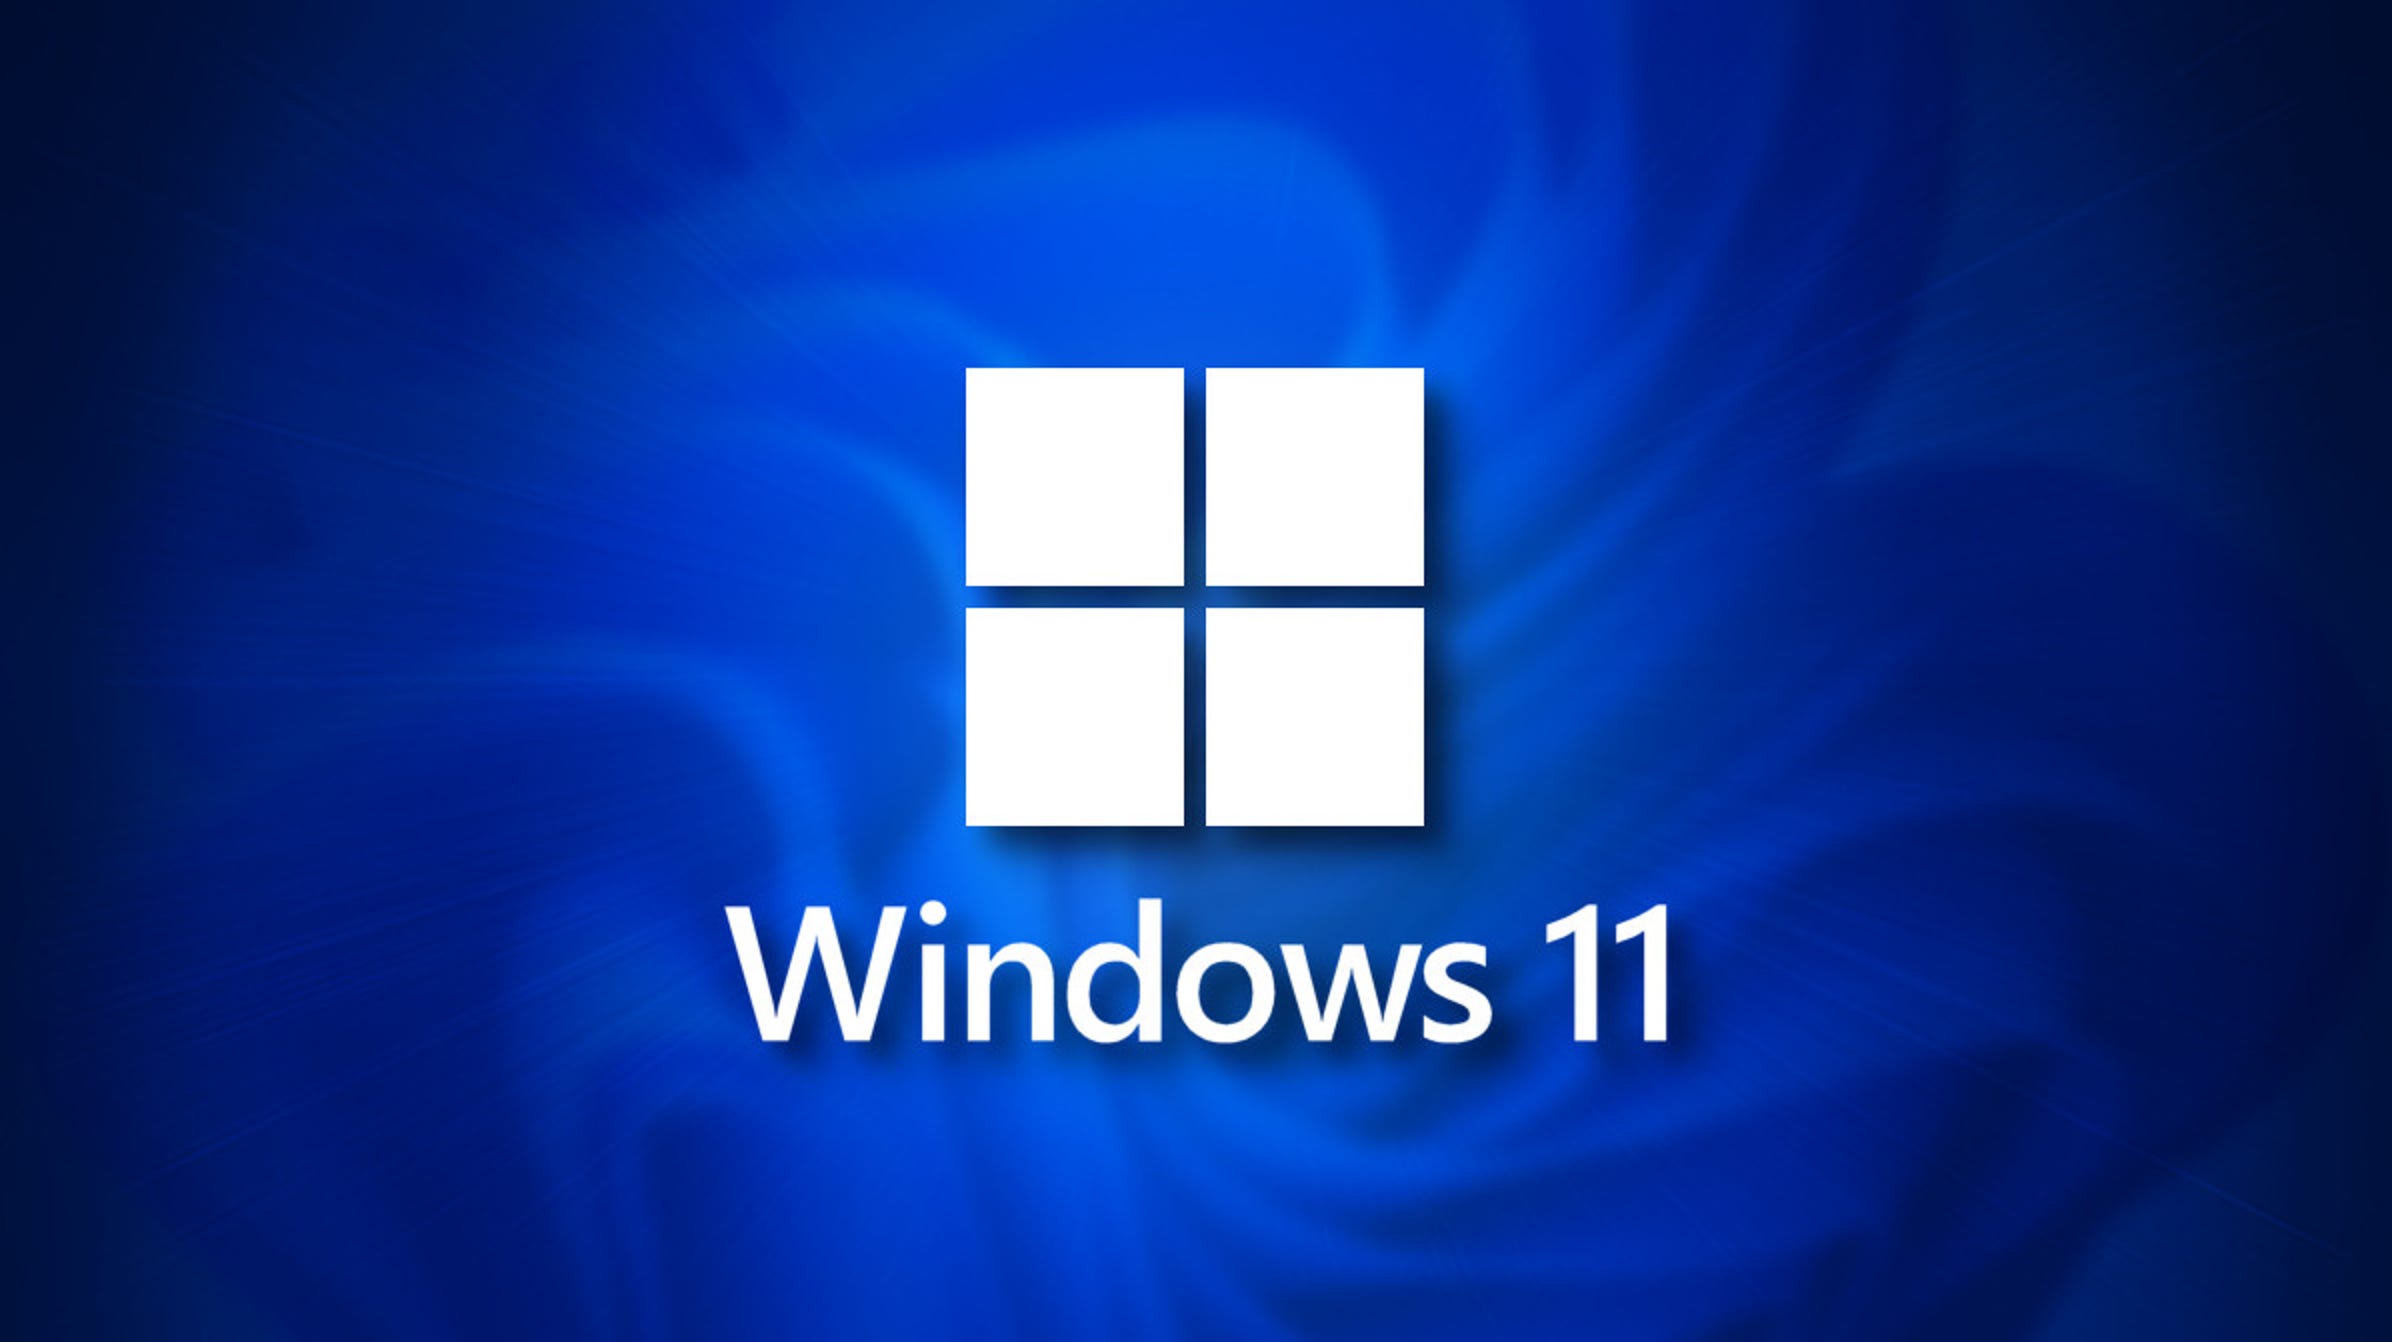 Windows 11 Pro’s Setup Process Will Need a Microsoft Account